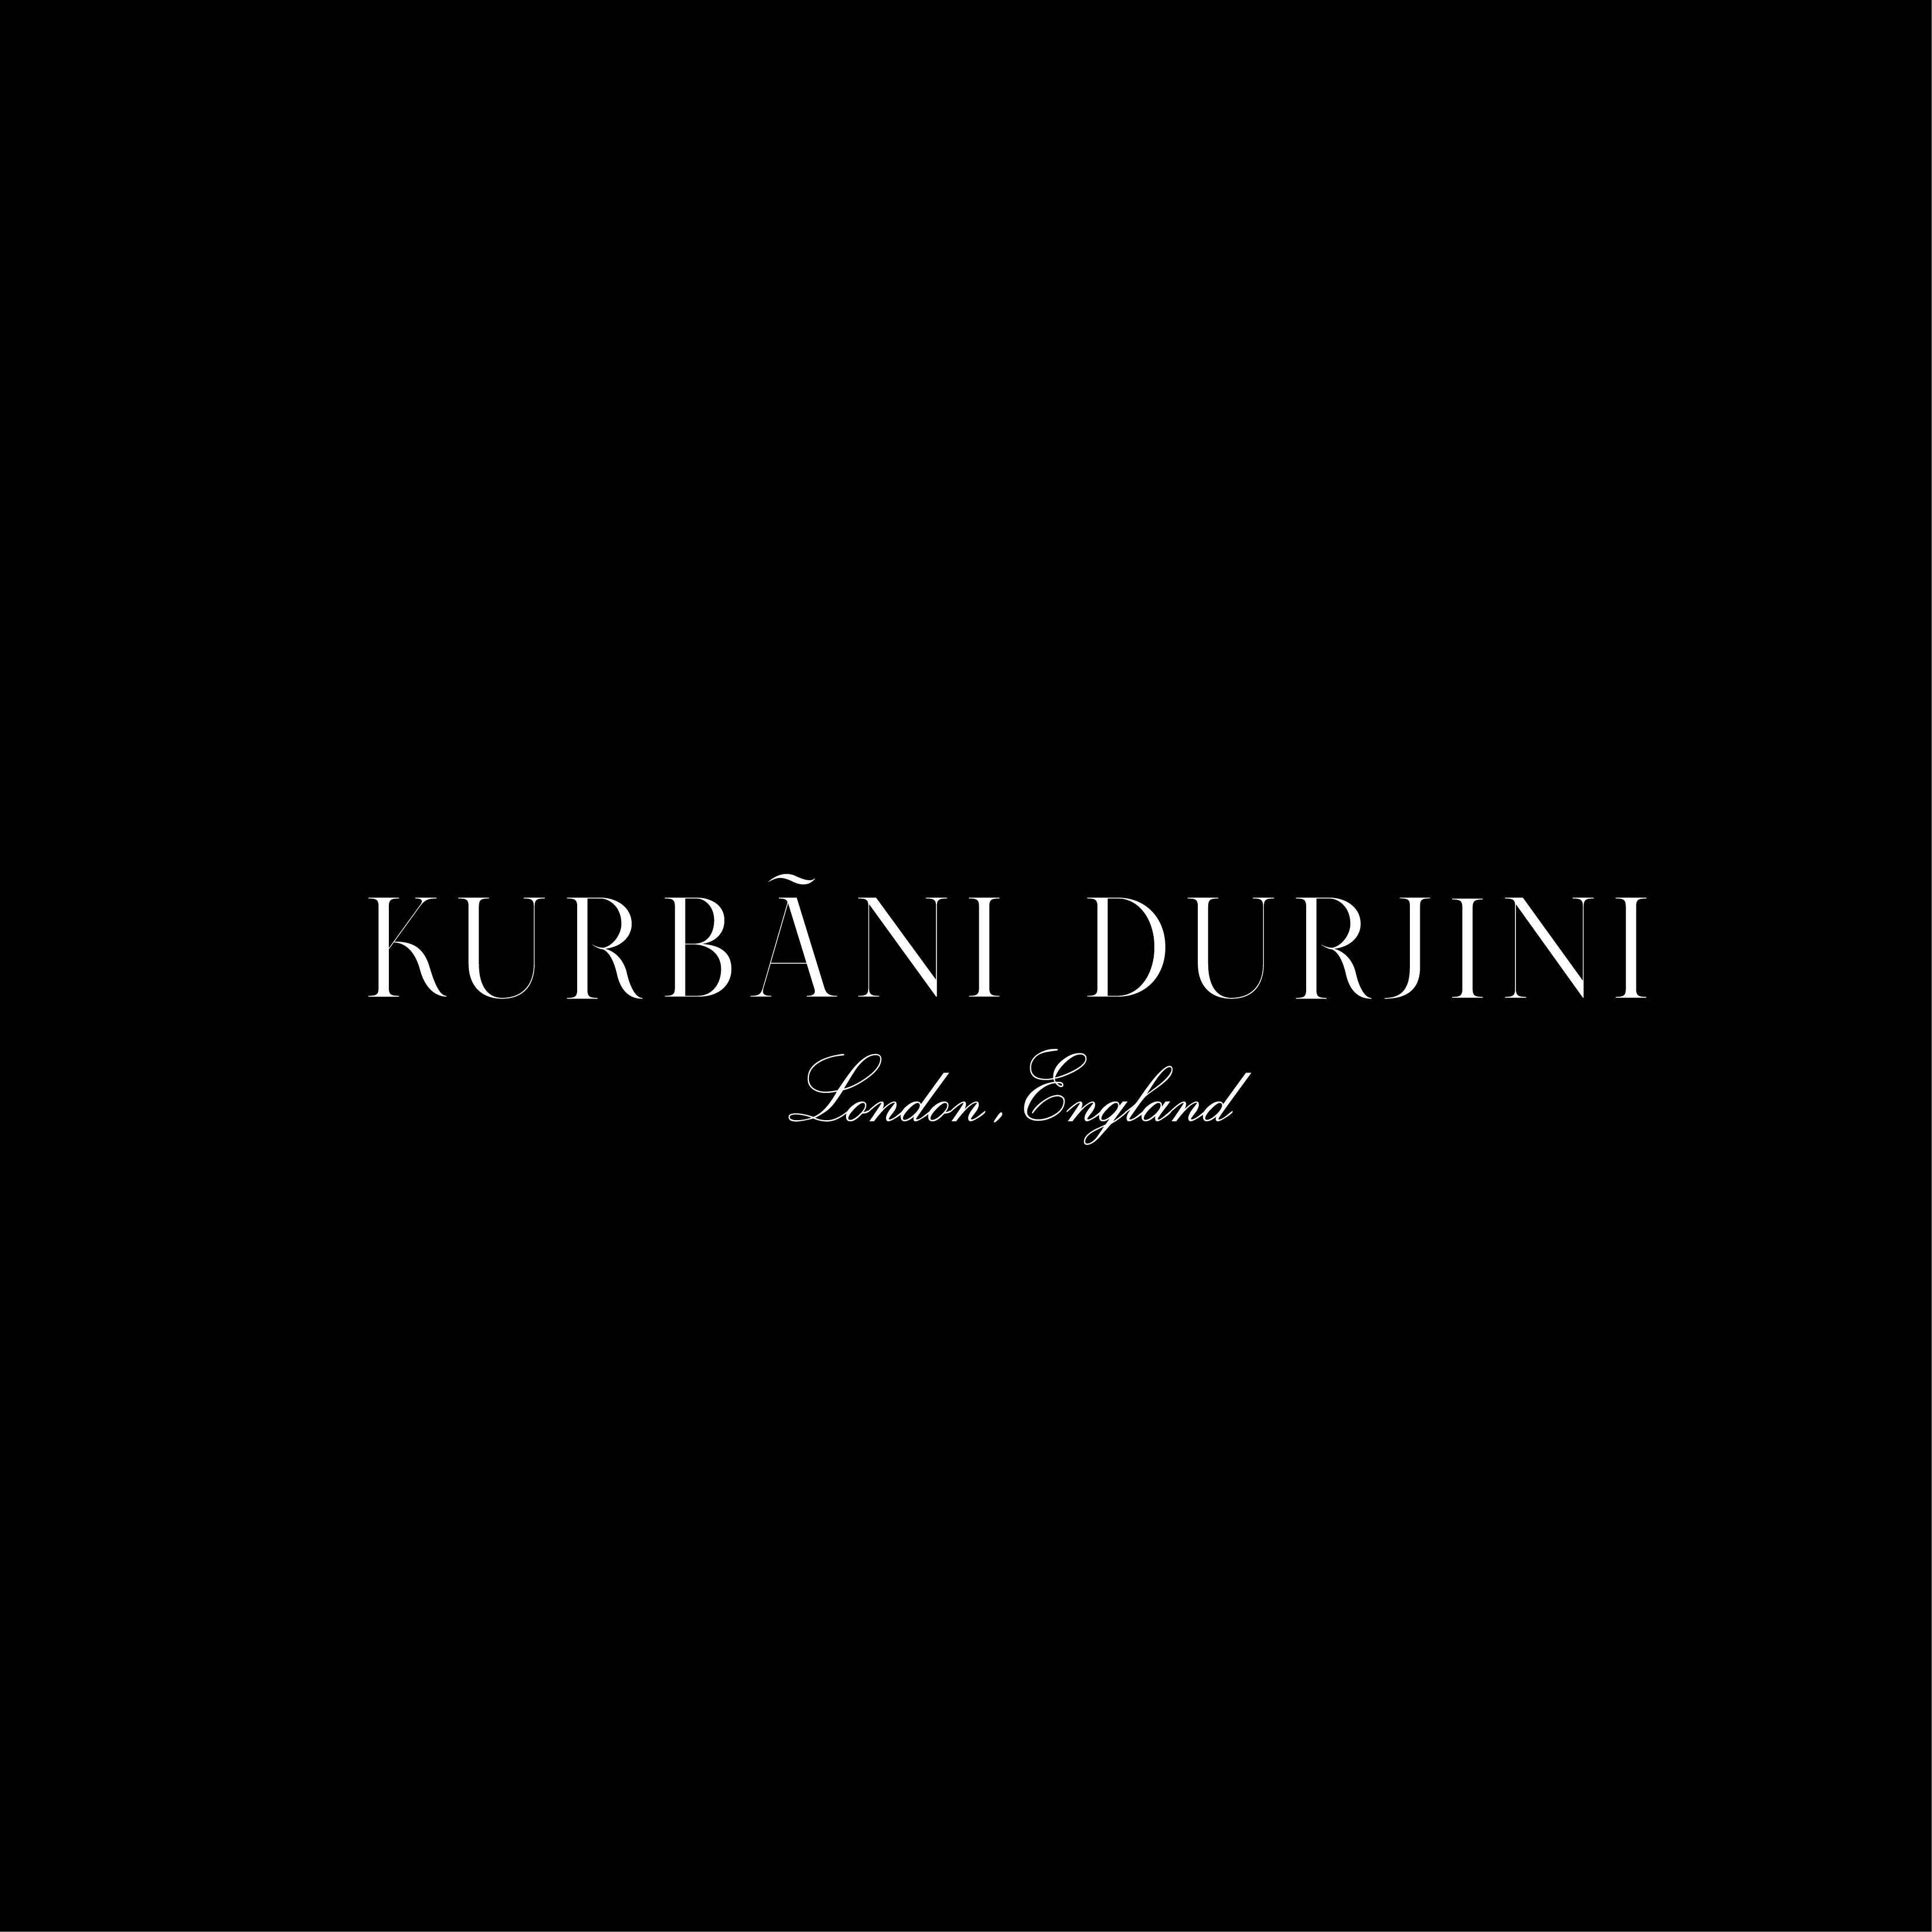 Kurbani Durjani.jpeg